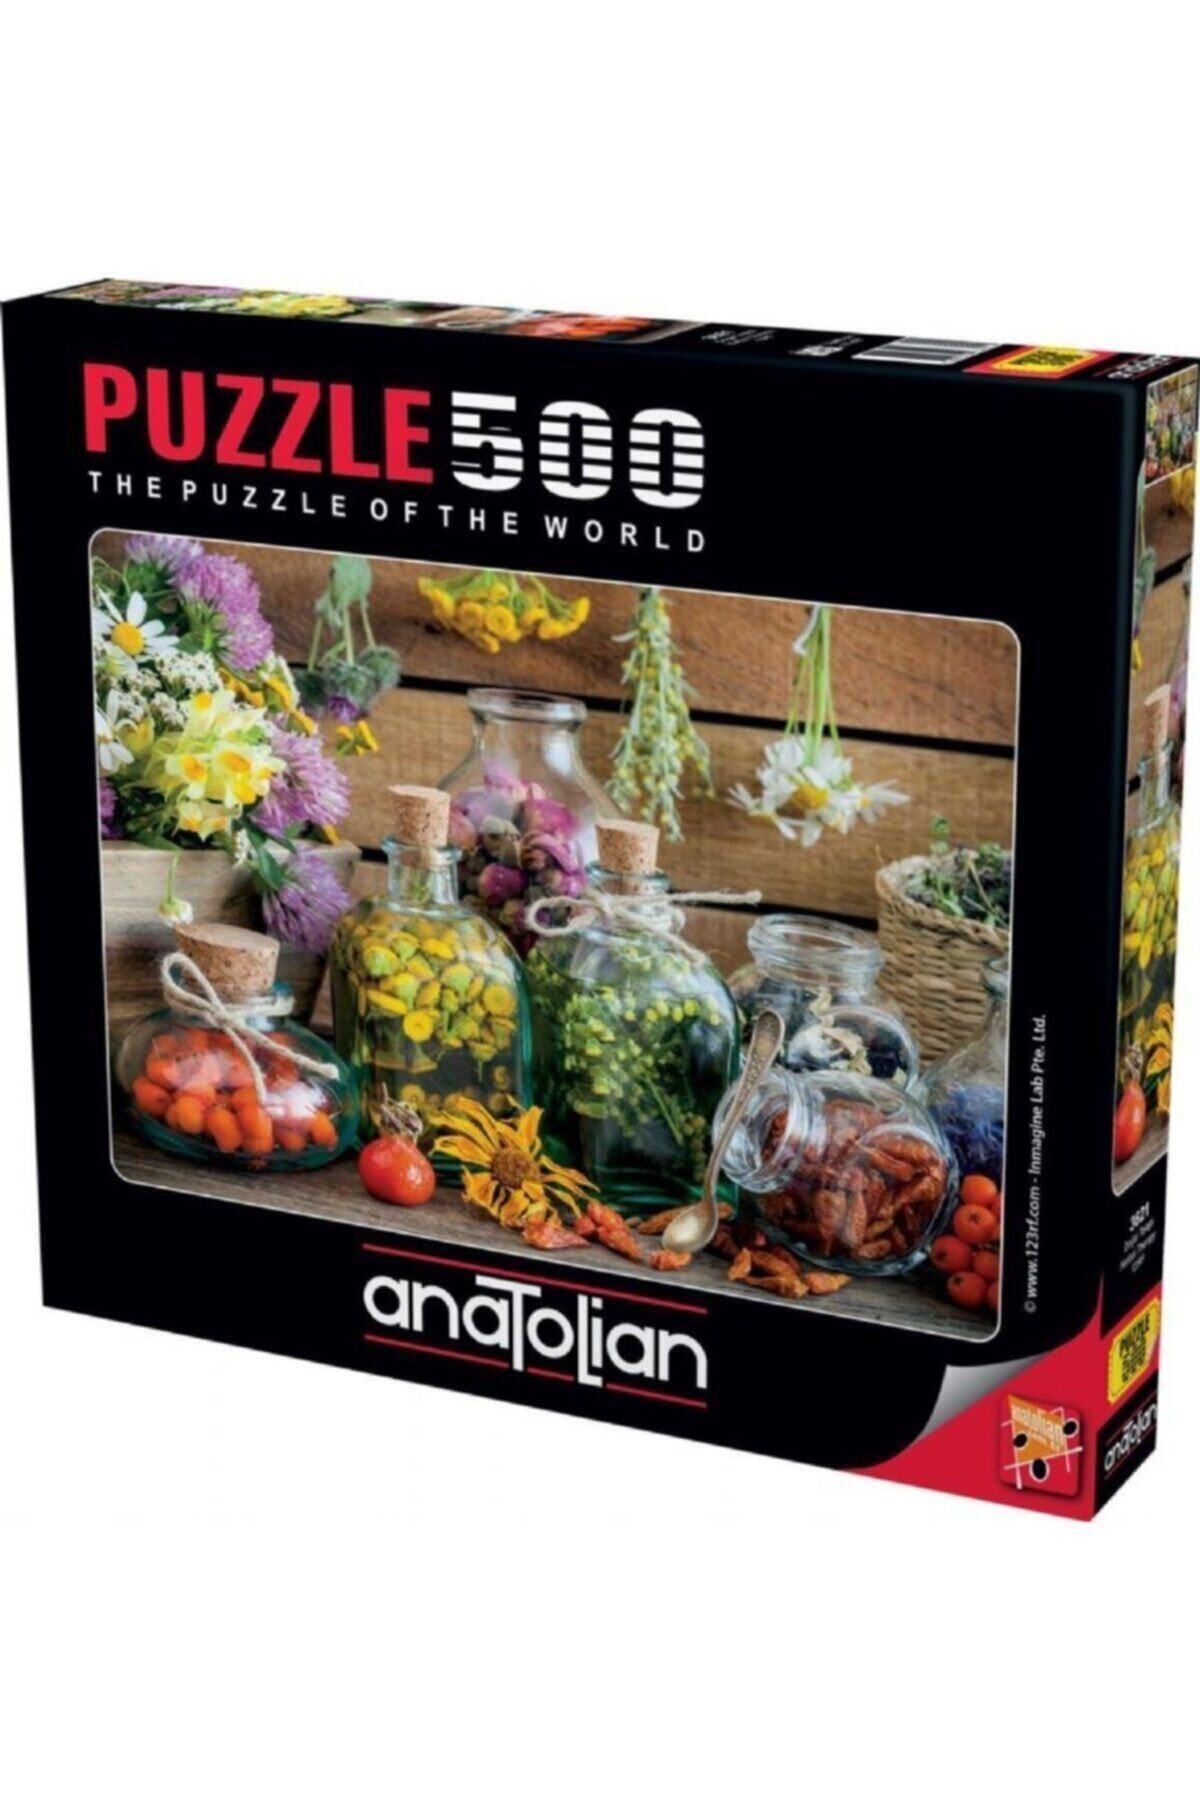 Anatolian Puzzle Doğal Terapi / 500 Parçalık Puzzle, Kod:3621